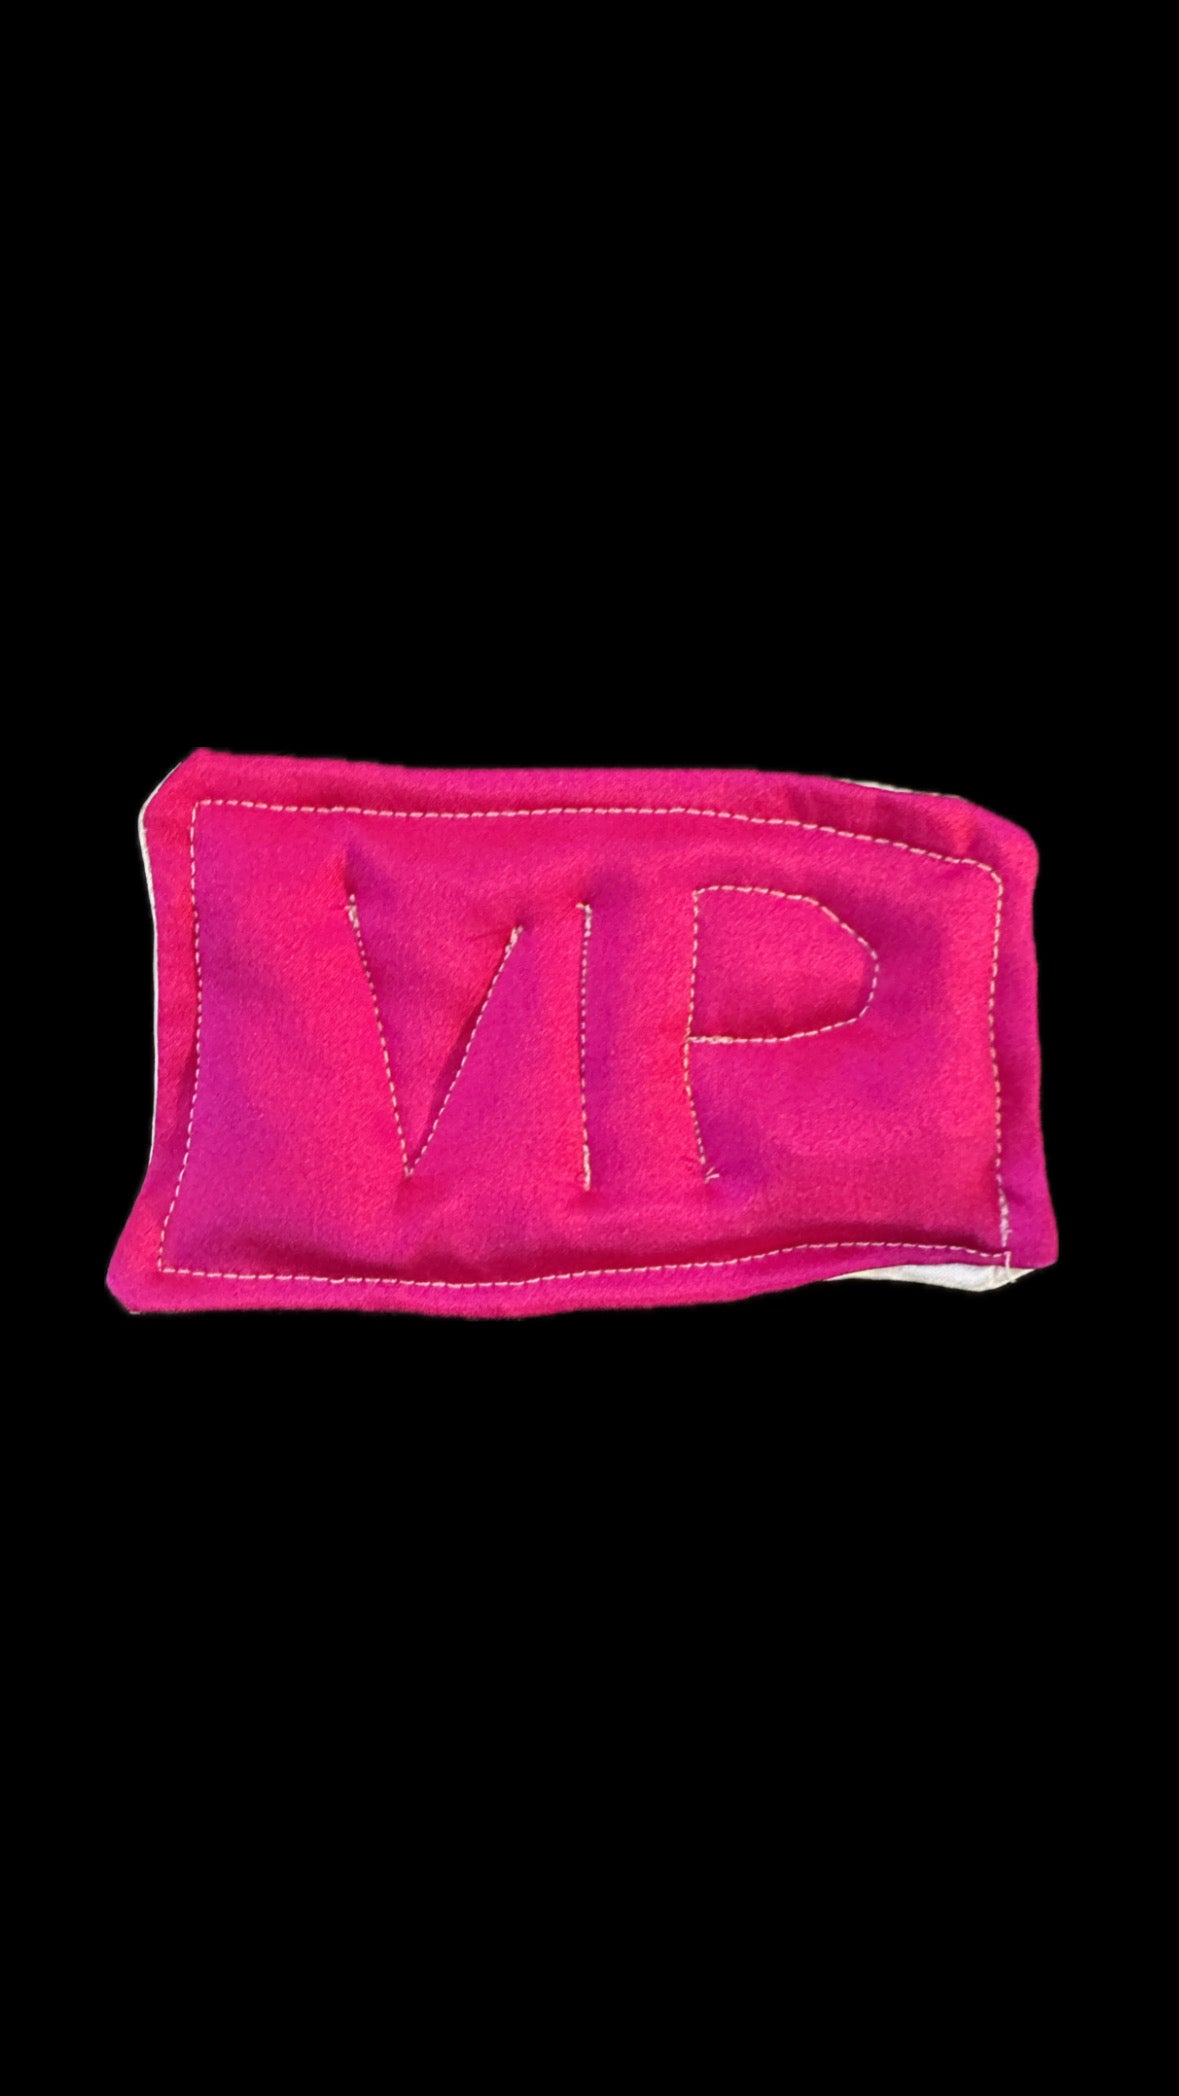 VIP Silk Pillow Clip